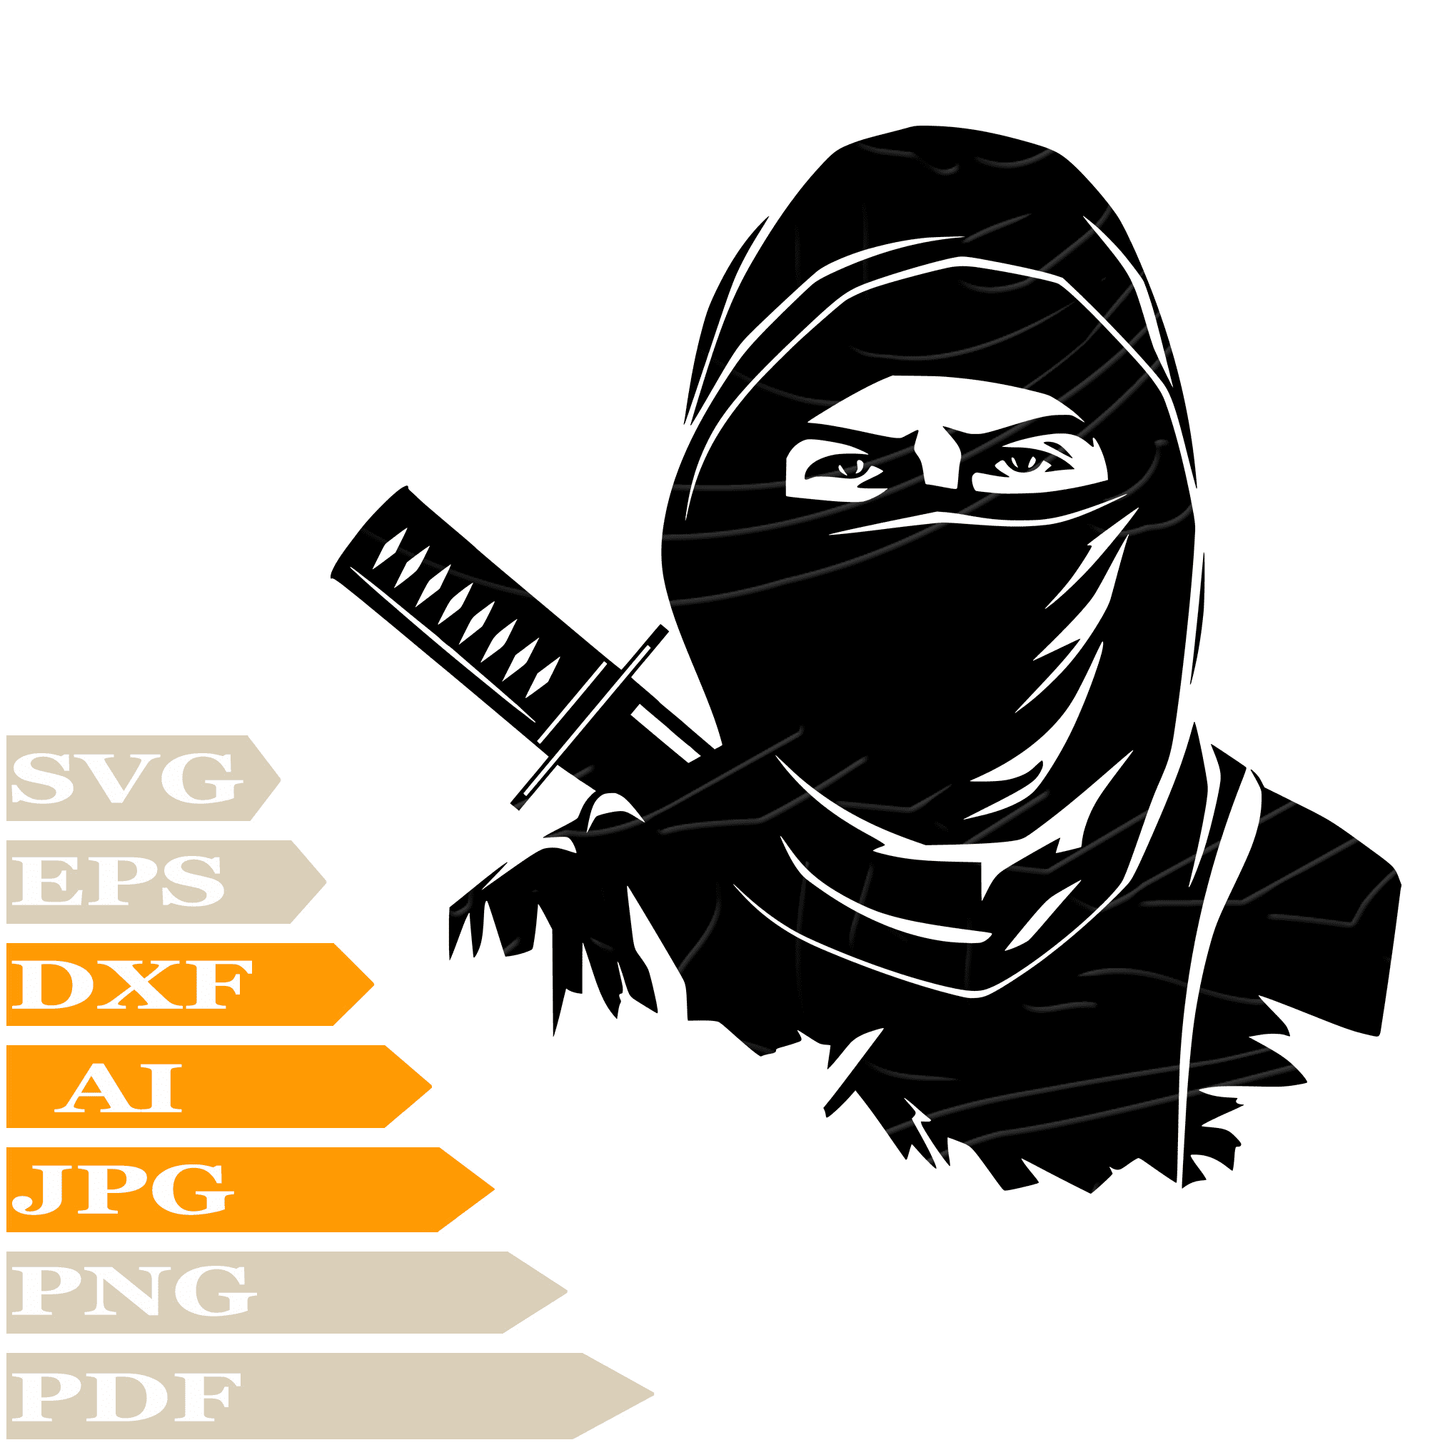 Ninja ﻿SVG, Japanese Ninja Personalized SVG, Ninja Drawing SVG, Ninja Vector Graphics, Japanese Ninja For Cricut, Digital Instant Download, Clip Art, Cut File, For Shirts, Silhouette, Illustration